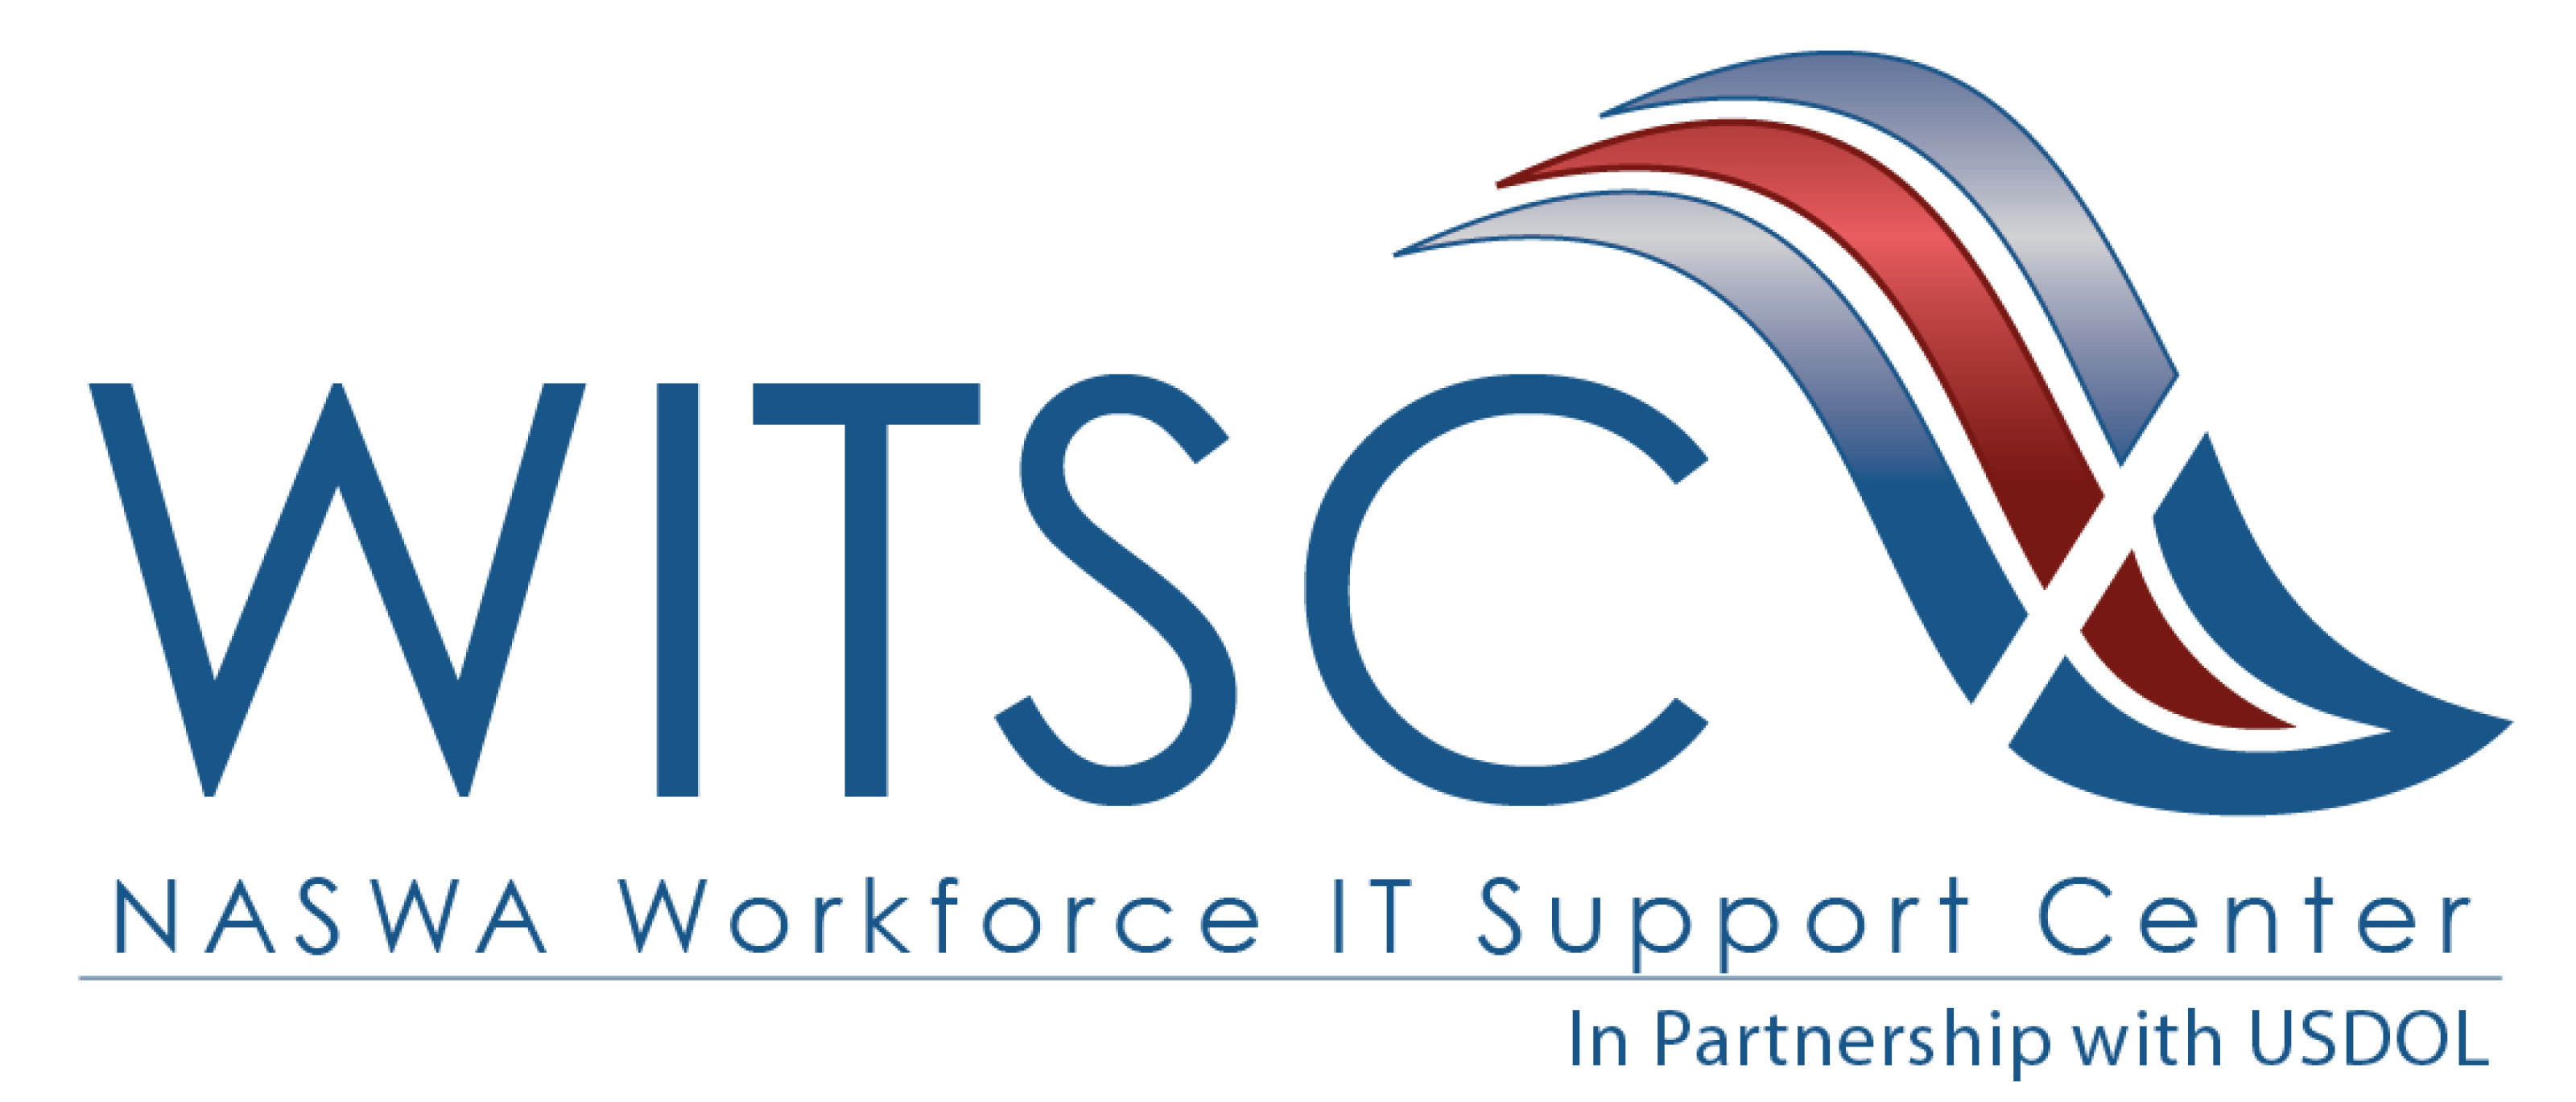 WITSC Logo_New